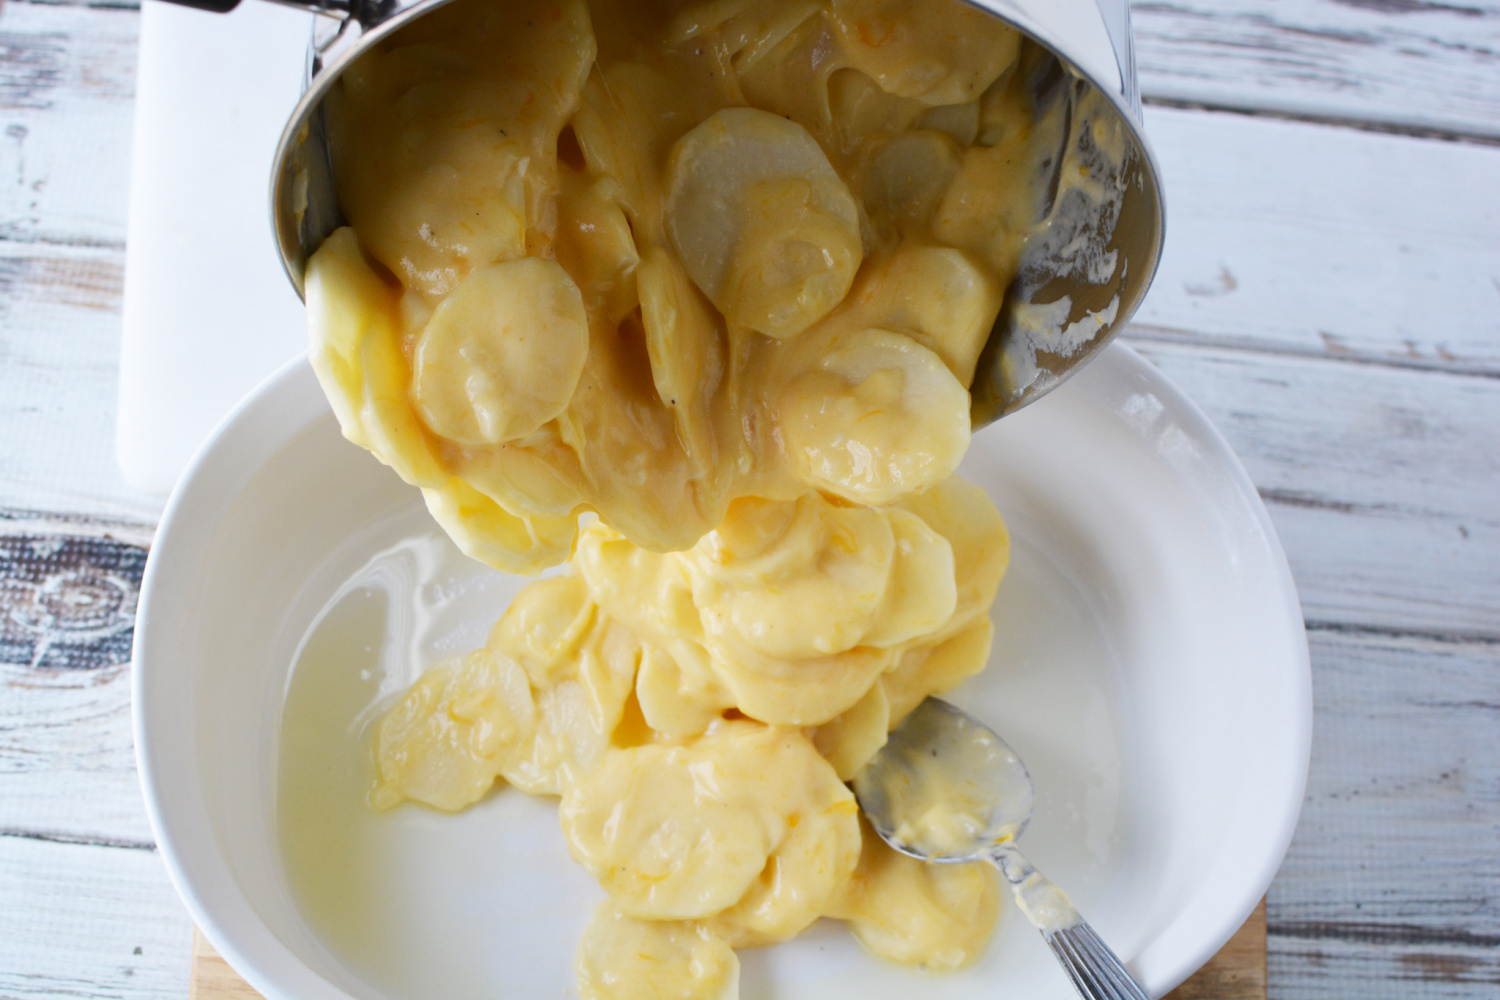 Pour Au Gratin Potatoes into prepared pan.